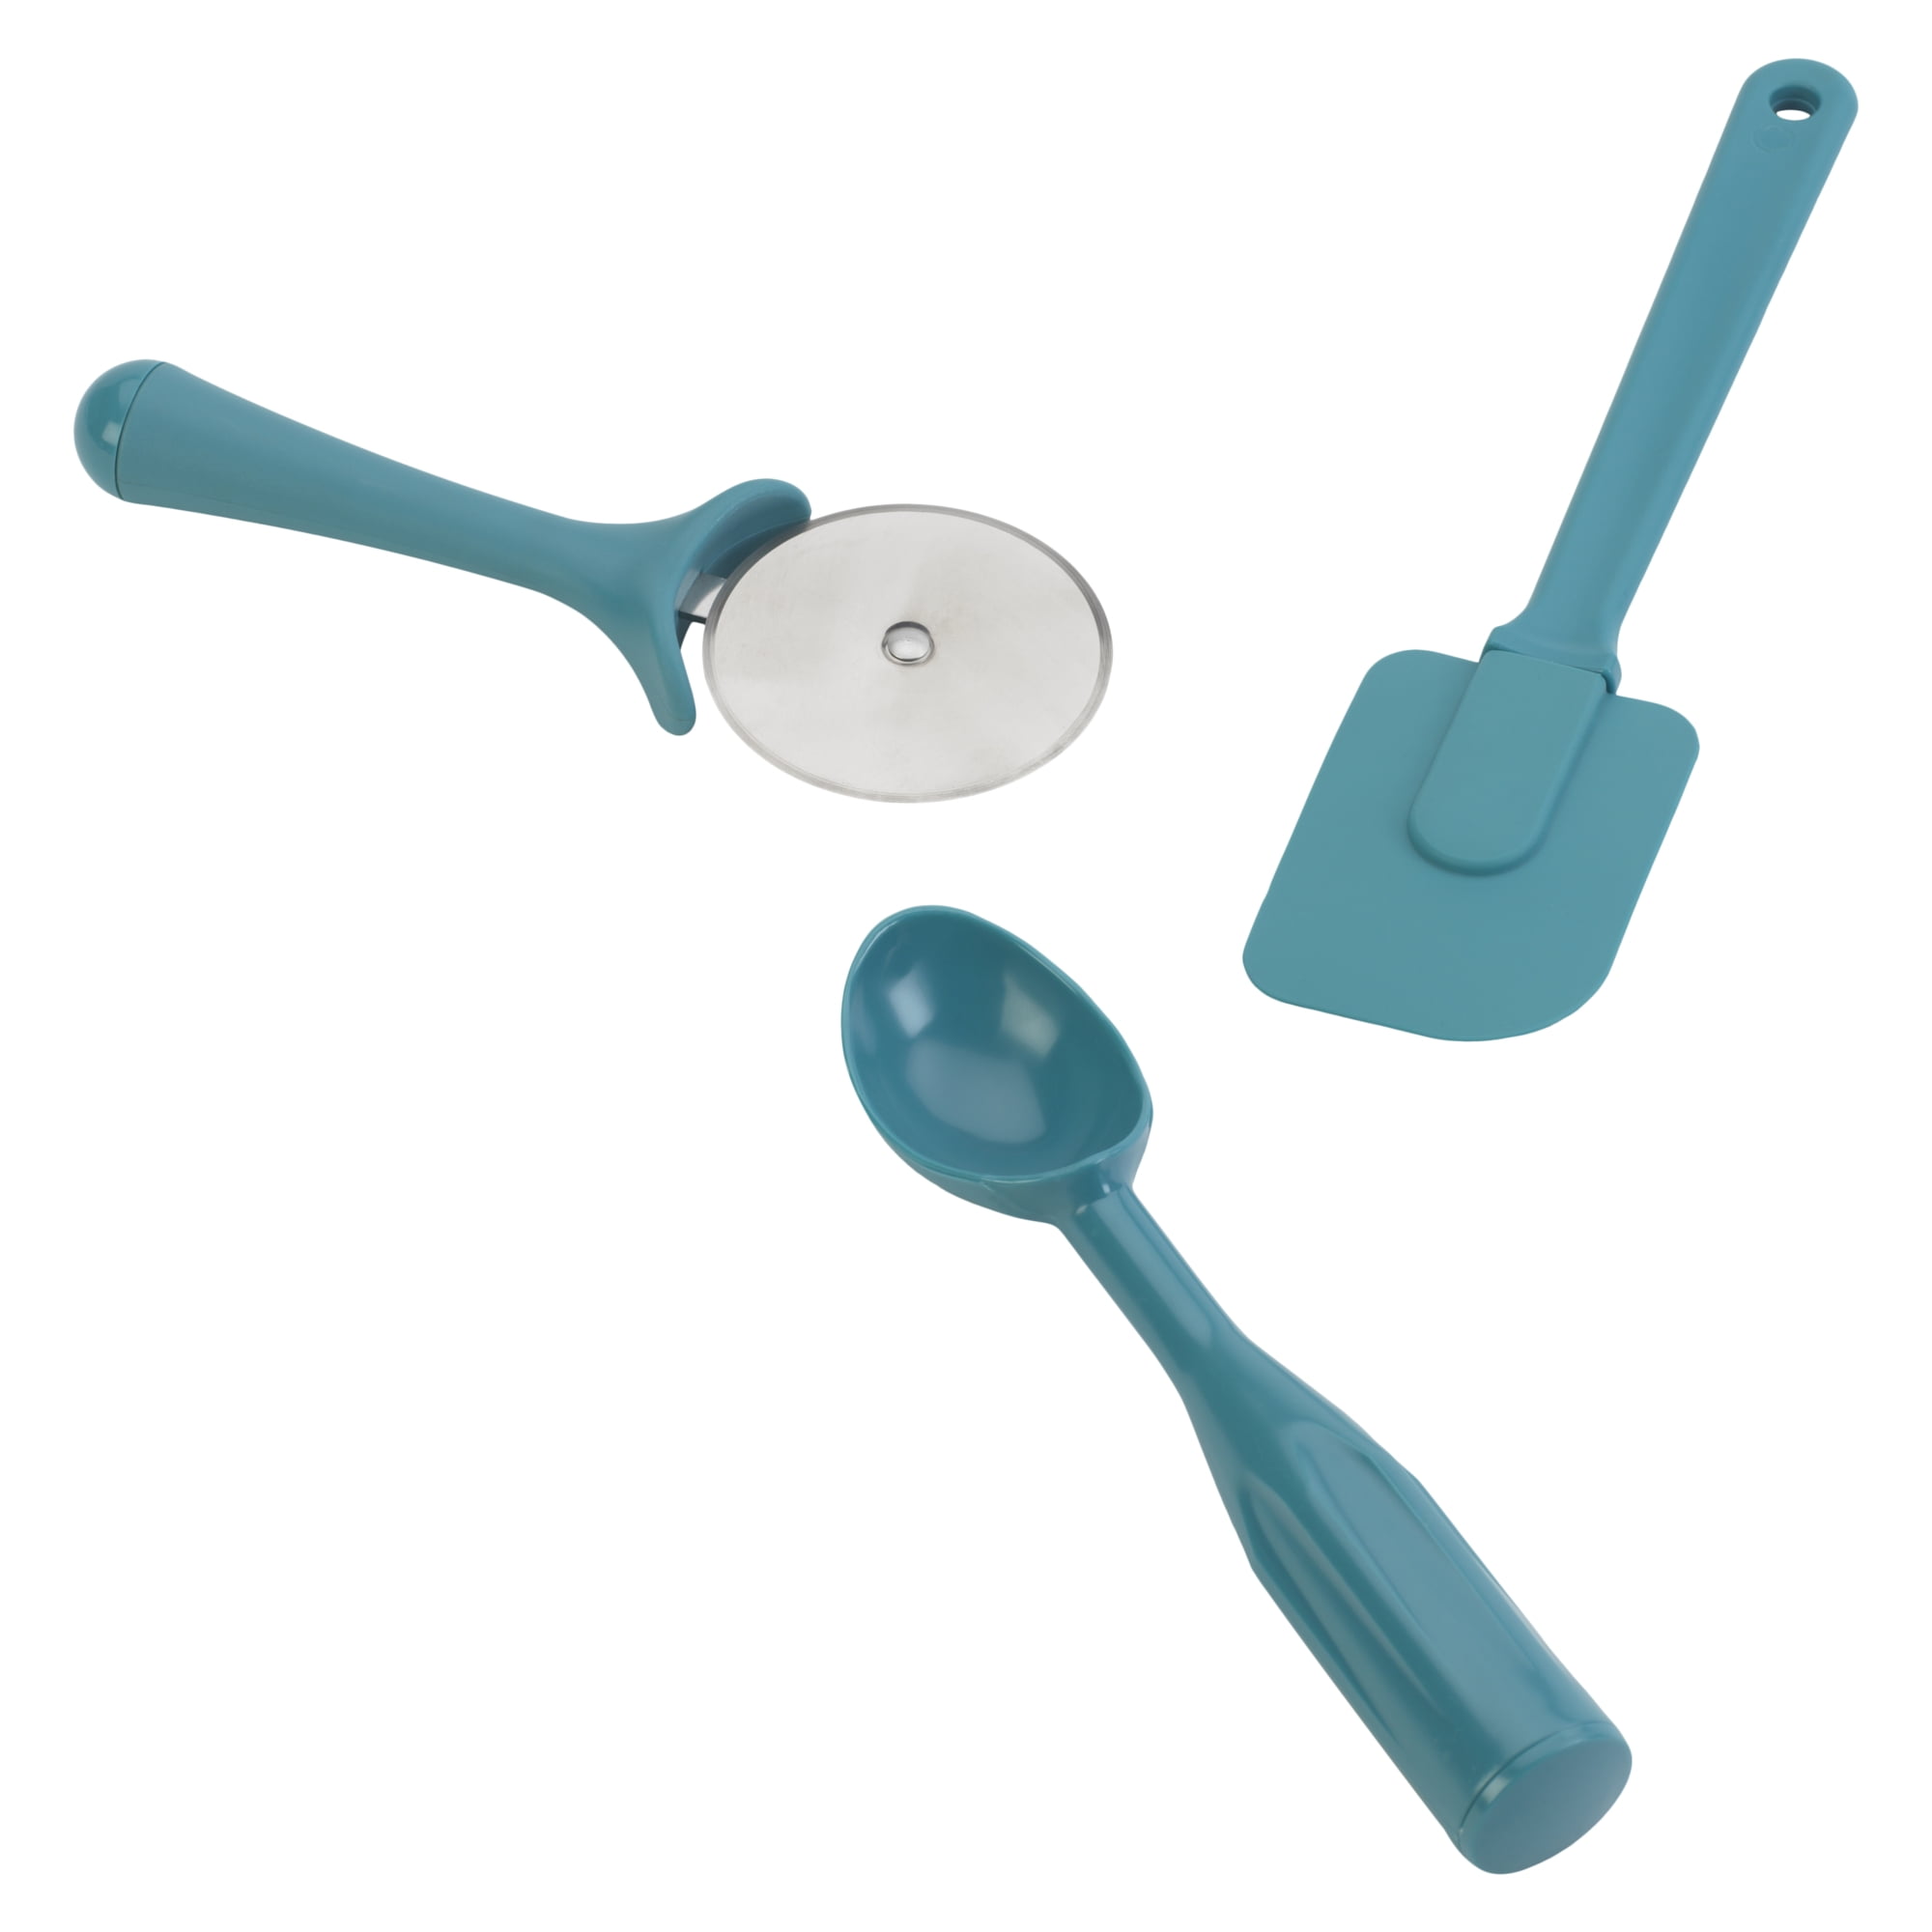 Mainstays 28-Piece Plastic Kitchen Tools and Gadgets Set, Navy Blue